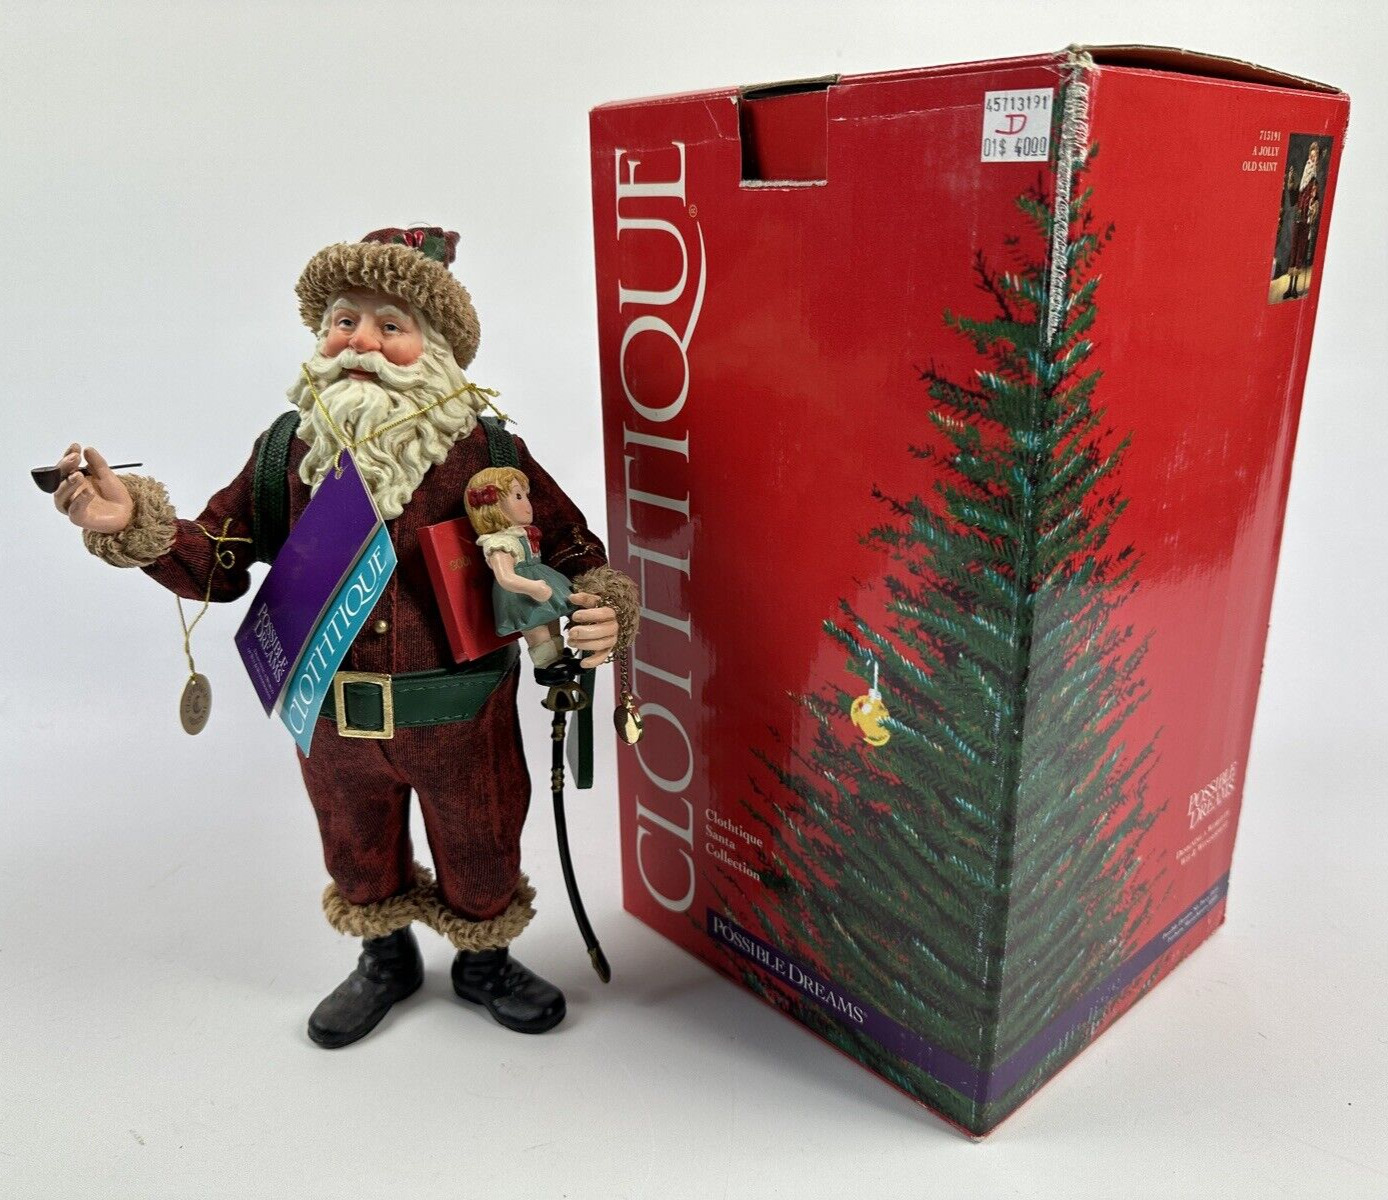 VTG Clothtique A Jolly Old Saint 713191 Christmas Figure Girl Book In Box